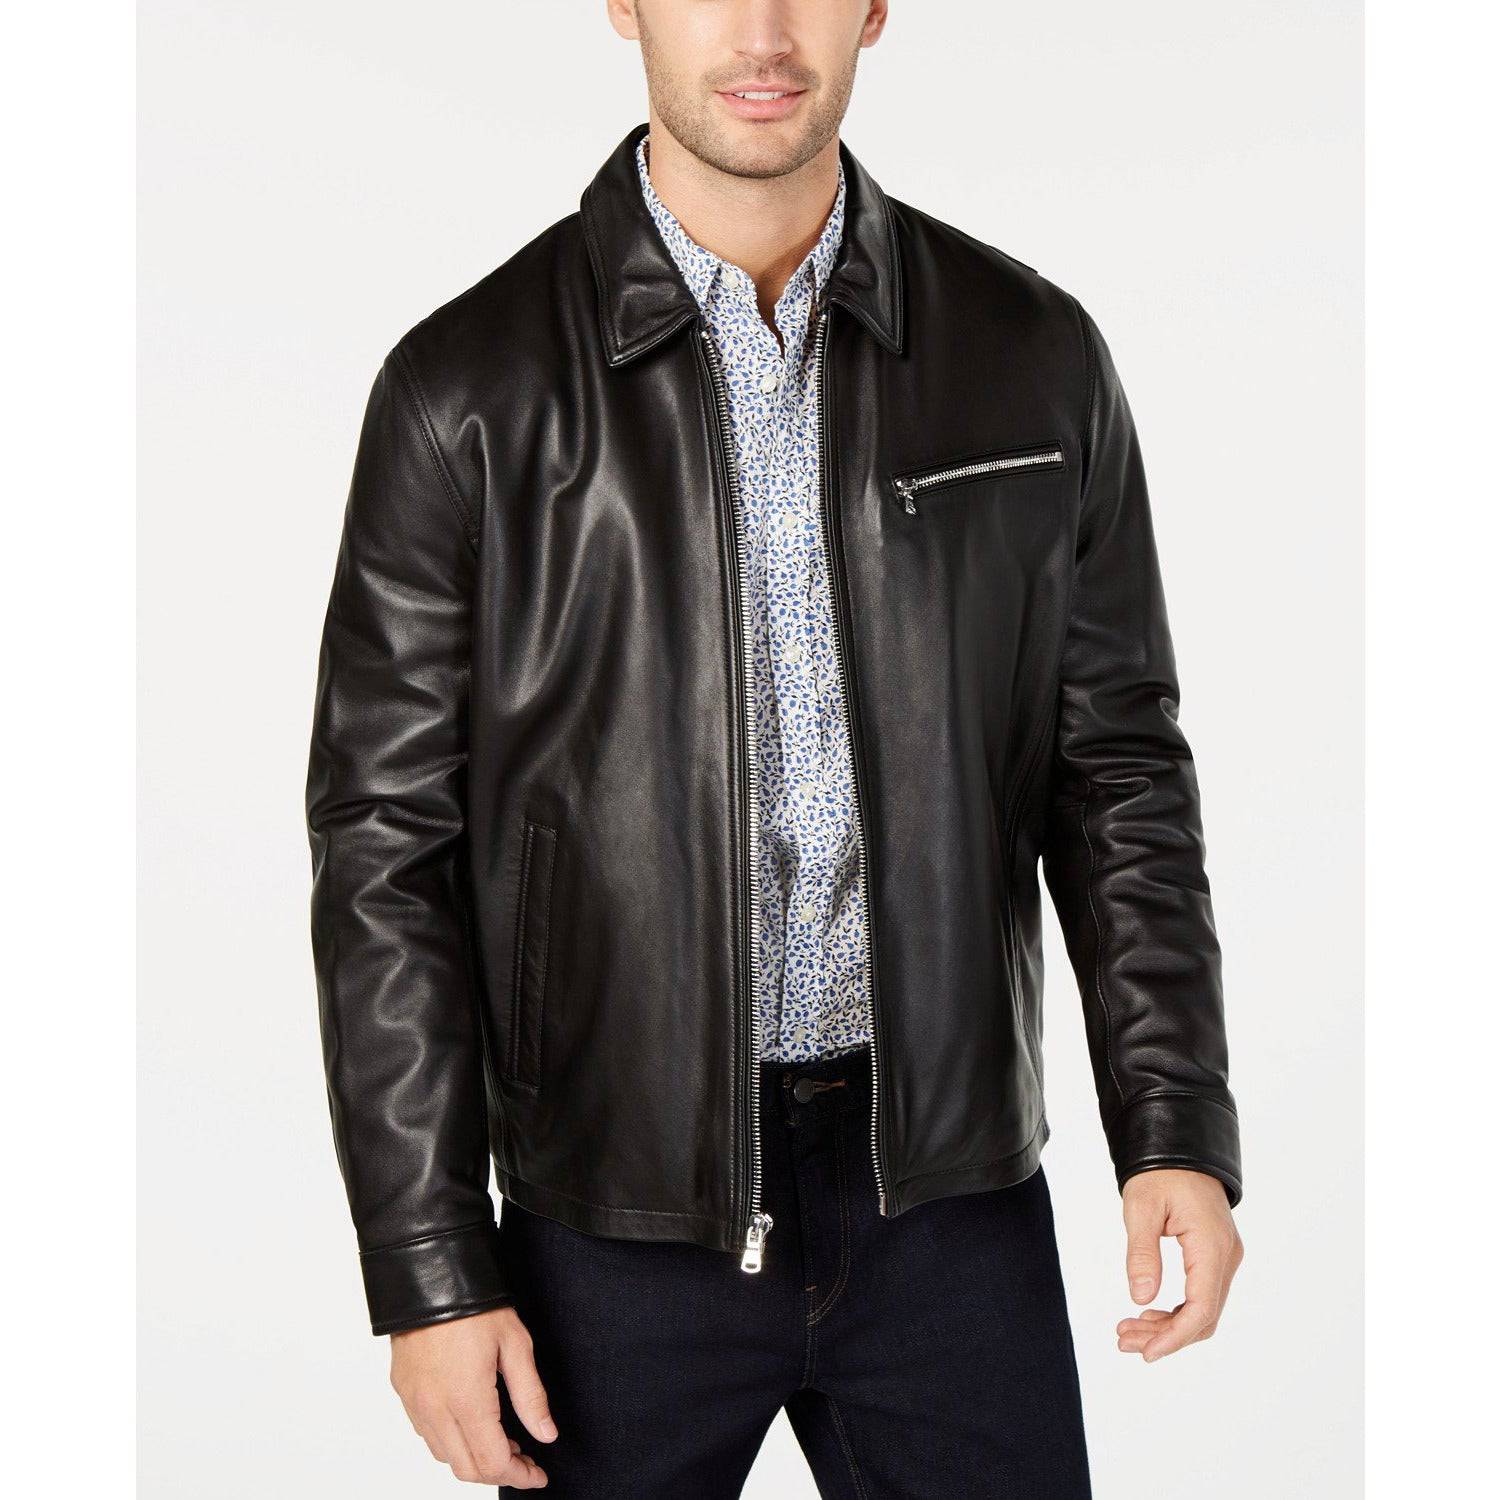 Michael Kors Men's Zip Front Leather Jacket - Zooloo Leather